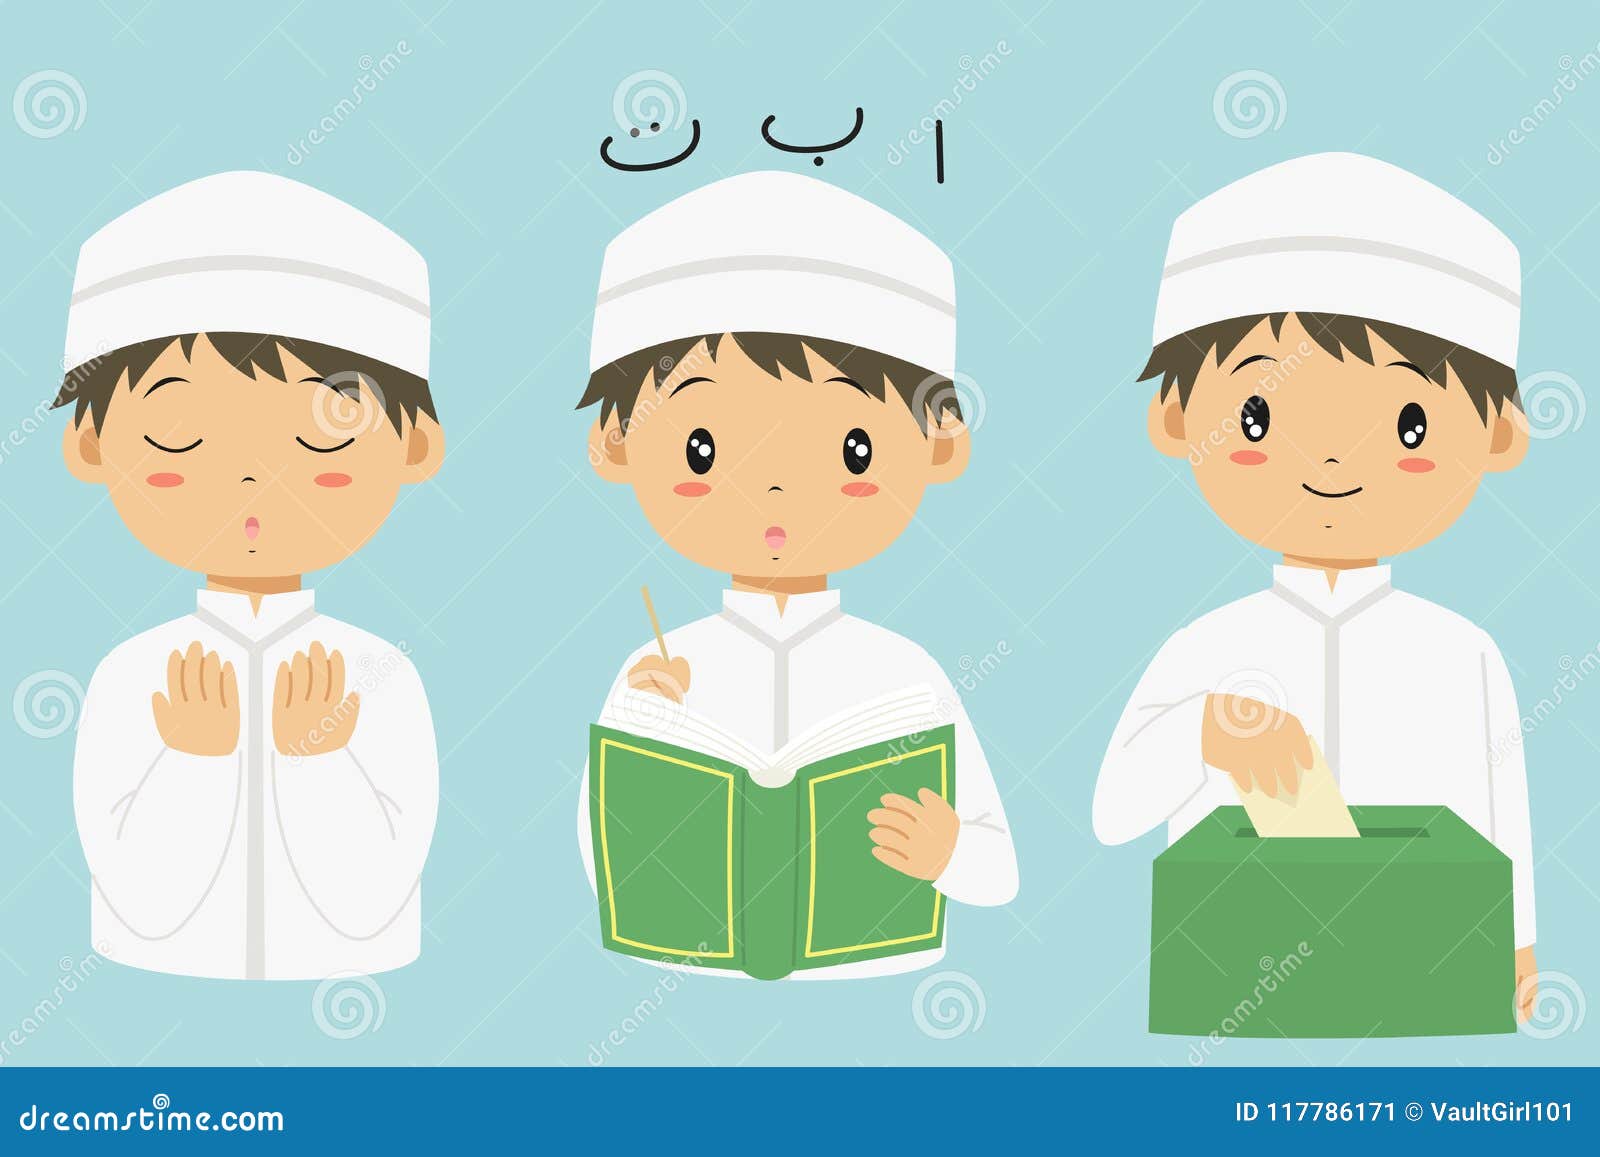 muslim boy cartoon  collection